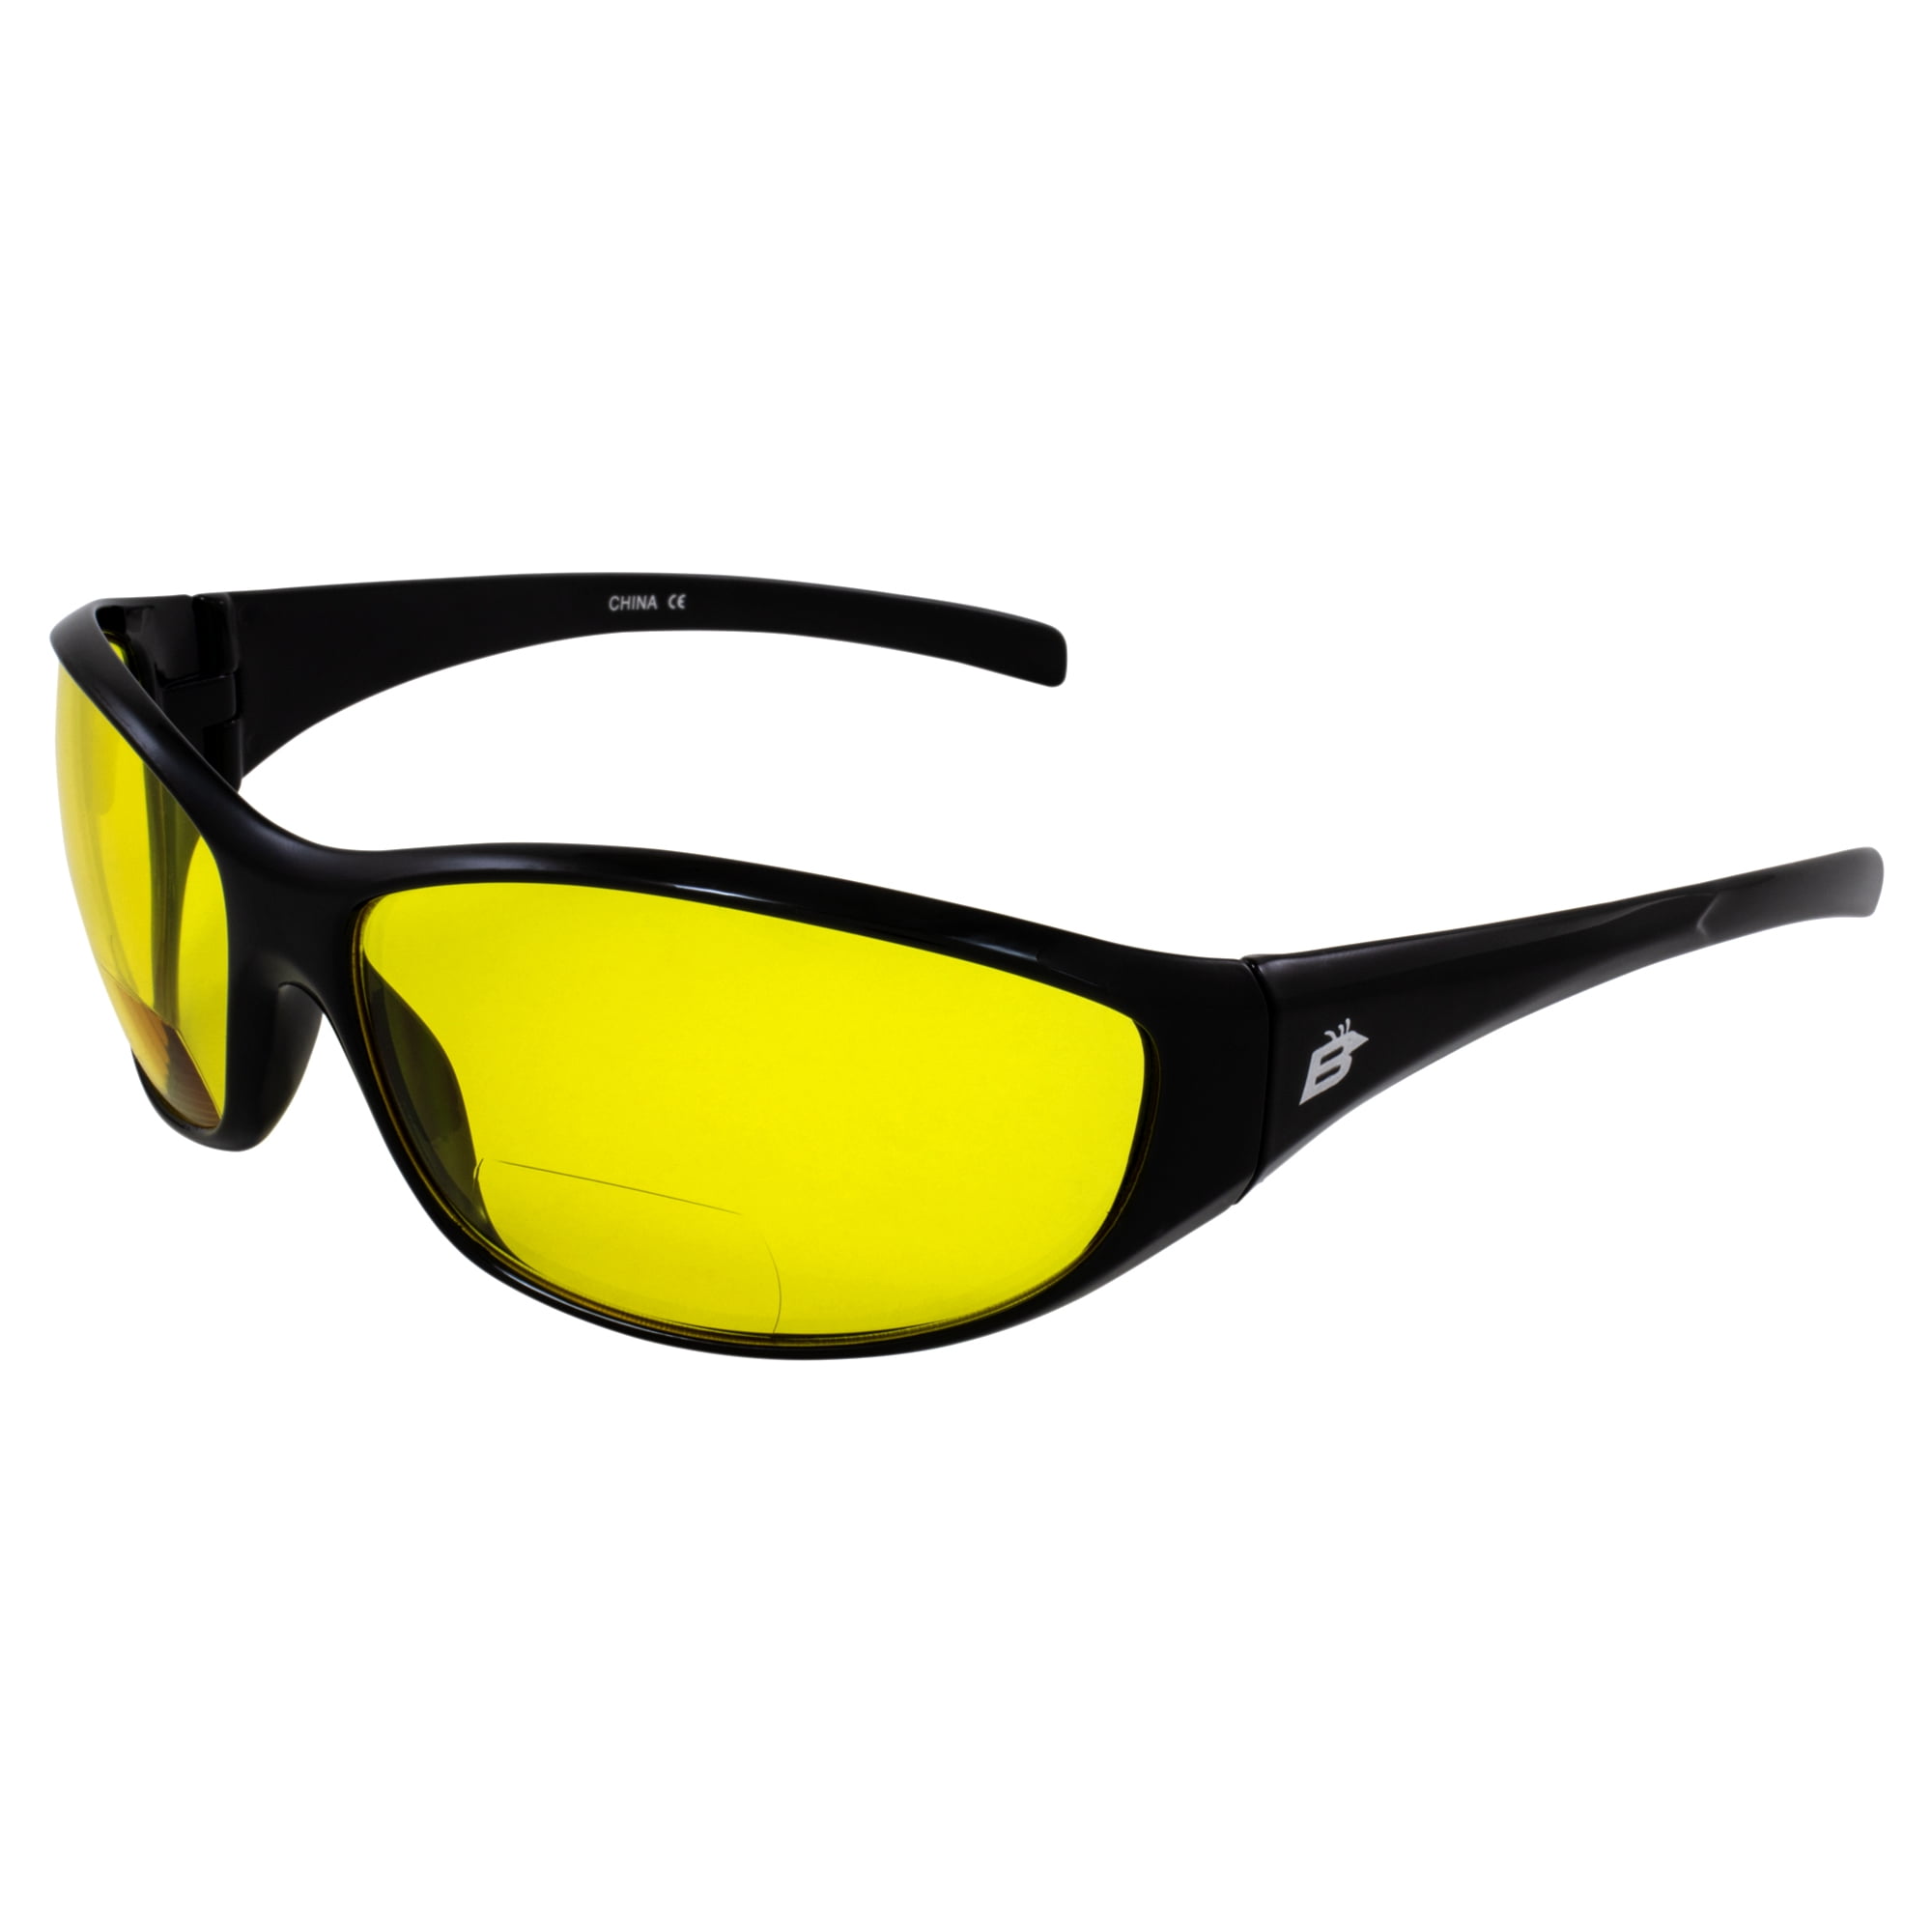 Sparrow Bifocal Safety Glasses By Birdz - Black Frames 2.5 Yellow Lenses 